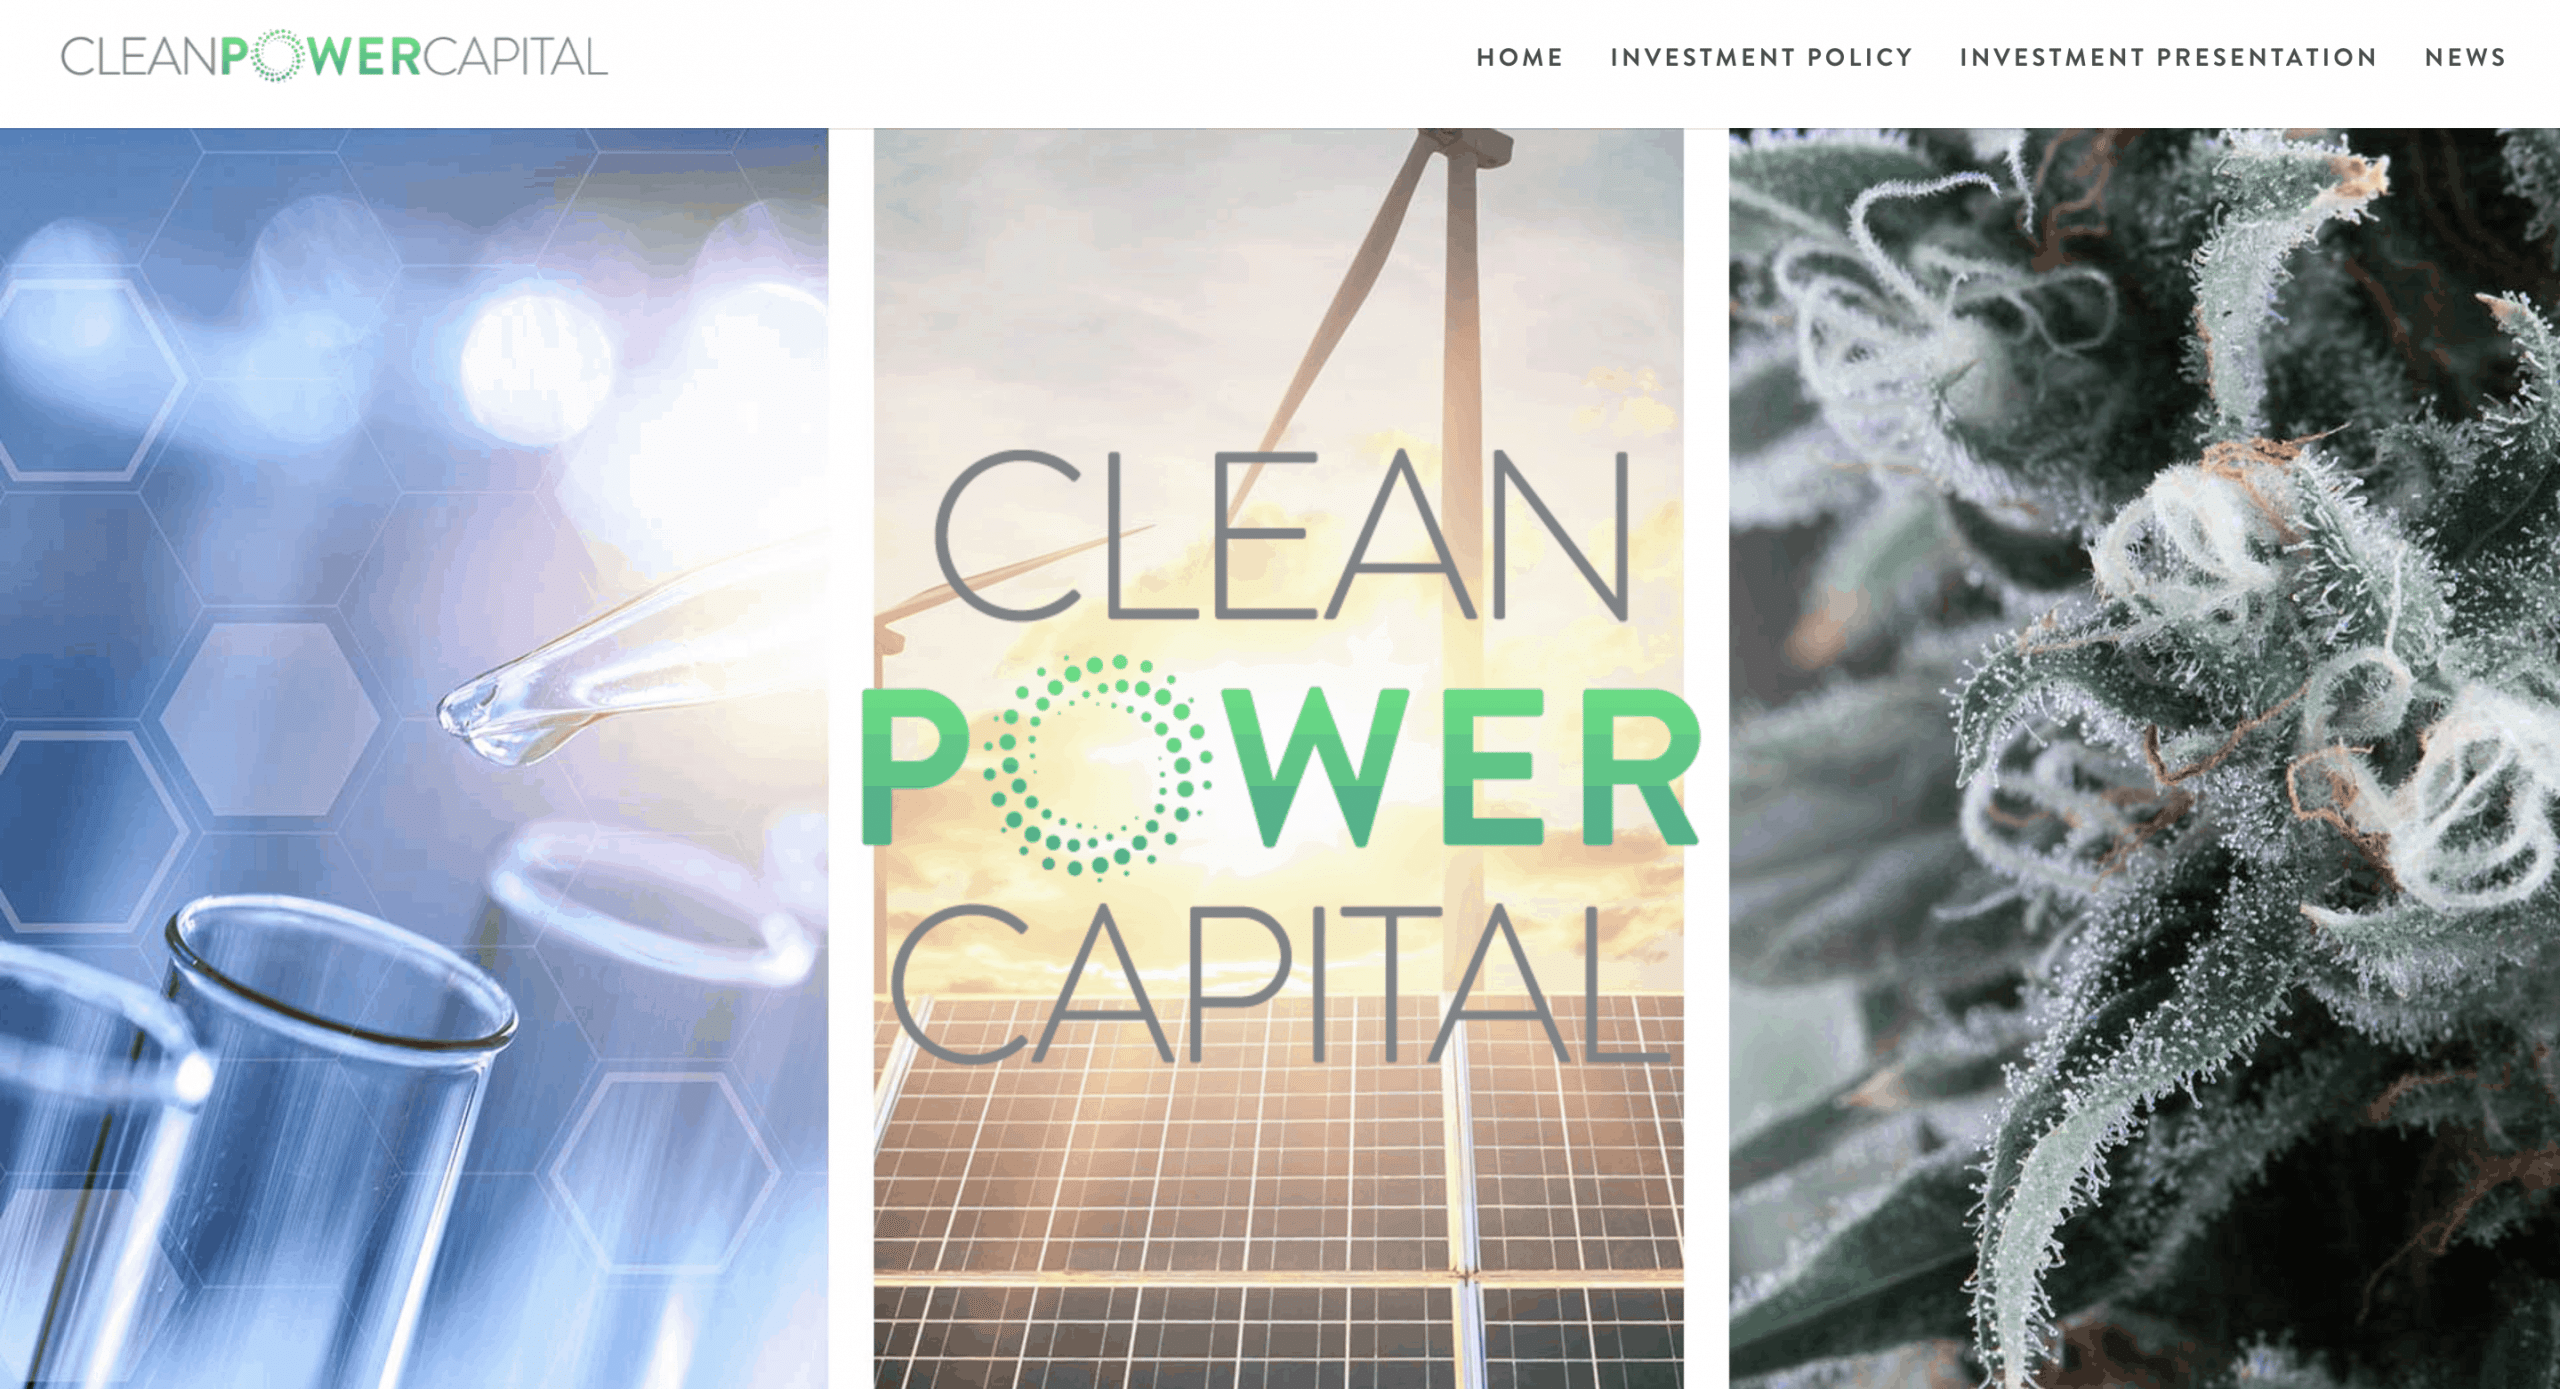 Clean Power Capital